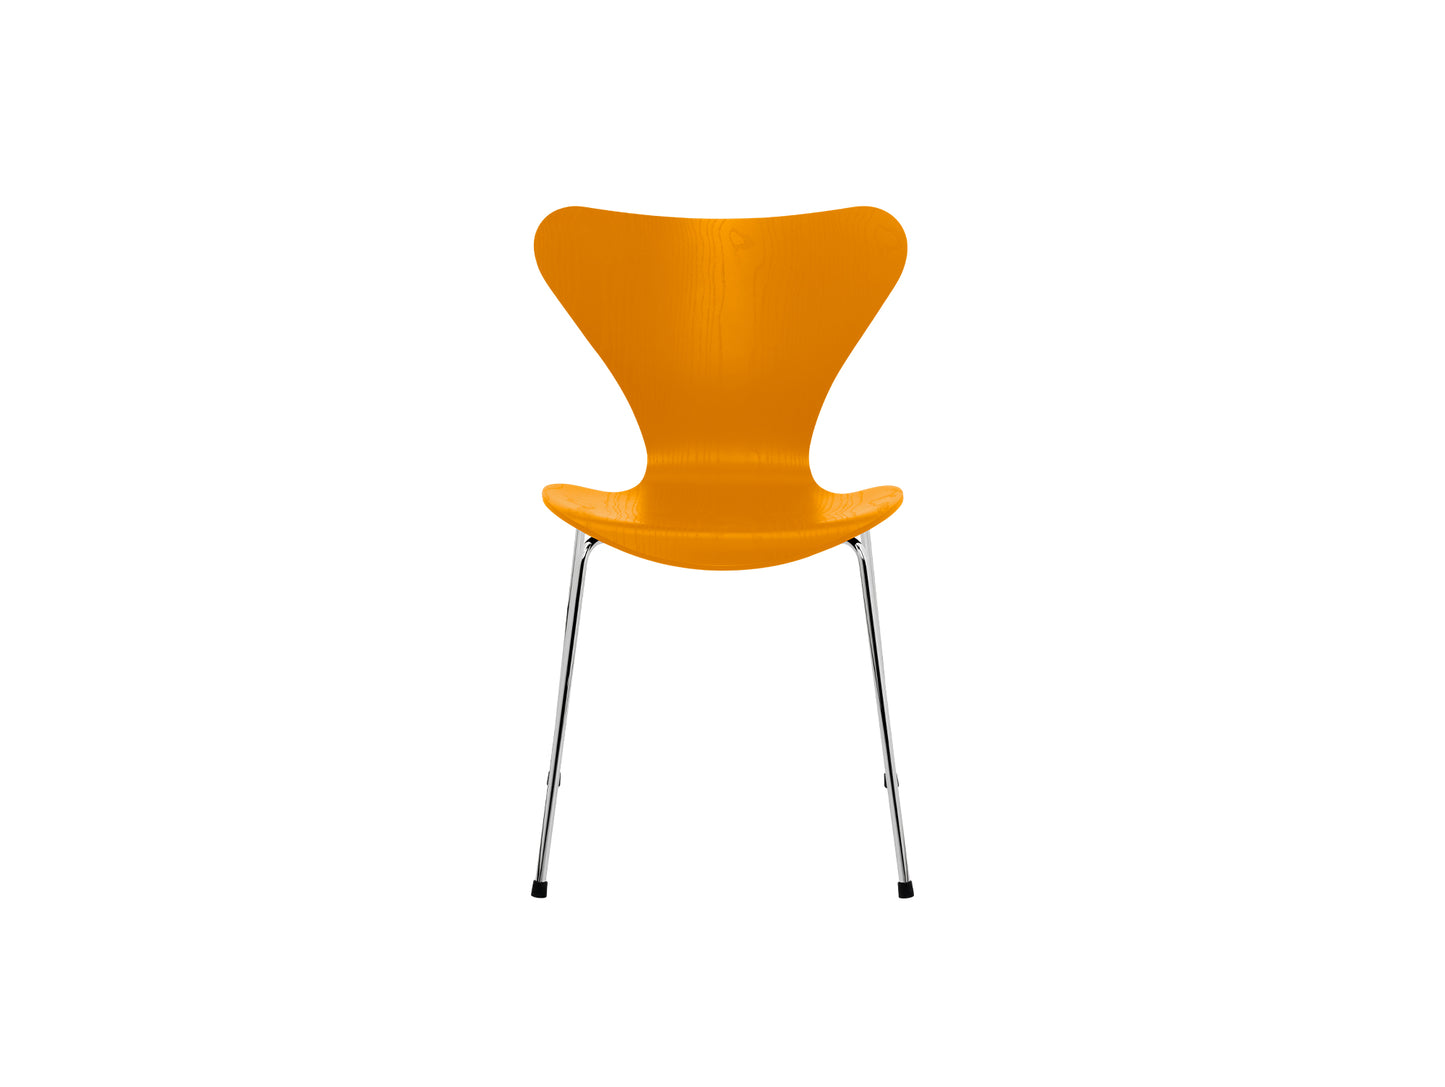 Series 7™ 3107 Dining Chair by Fritz Hansen - Burnt Yellow Coloured Ash Veneer Shell / Chromed Steel